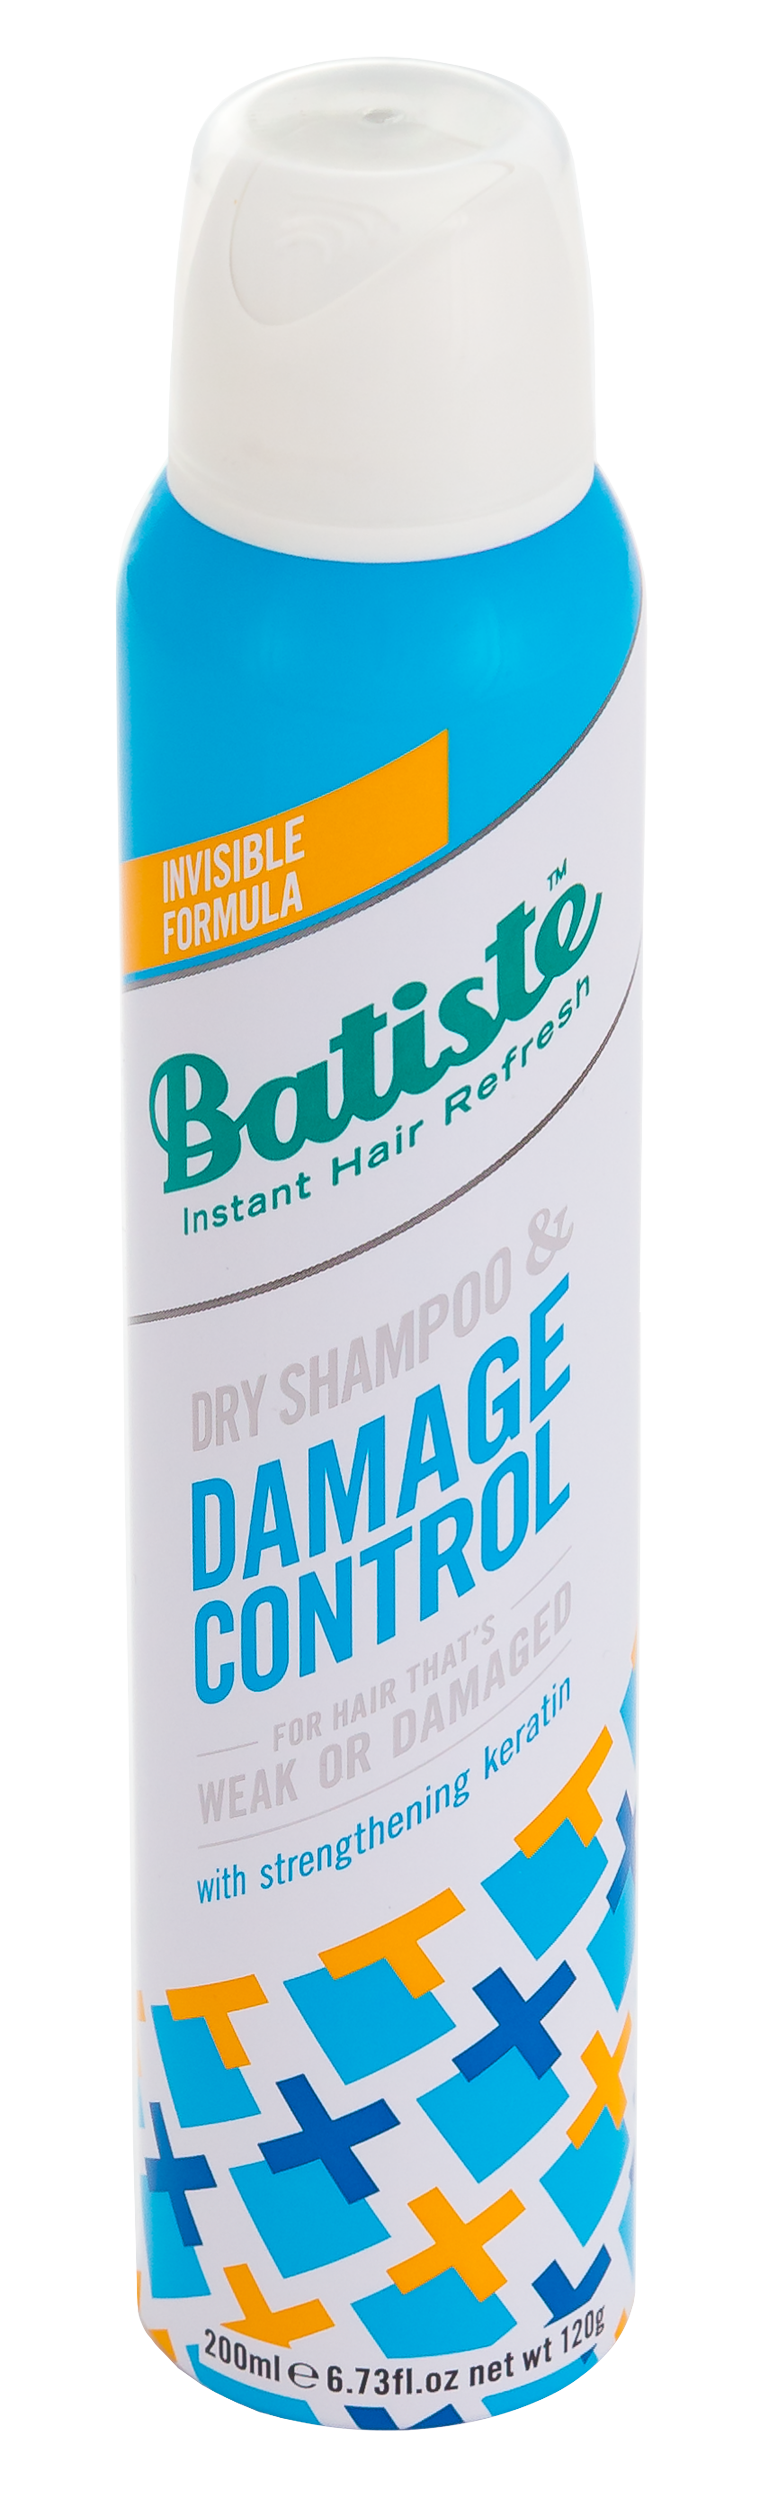 damage control suchy szampon batiste IMG_5675png